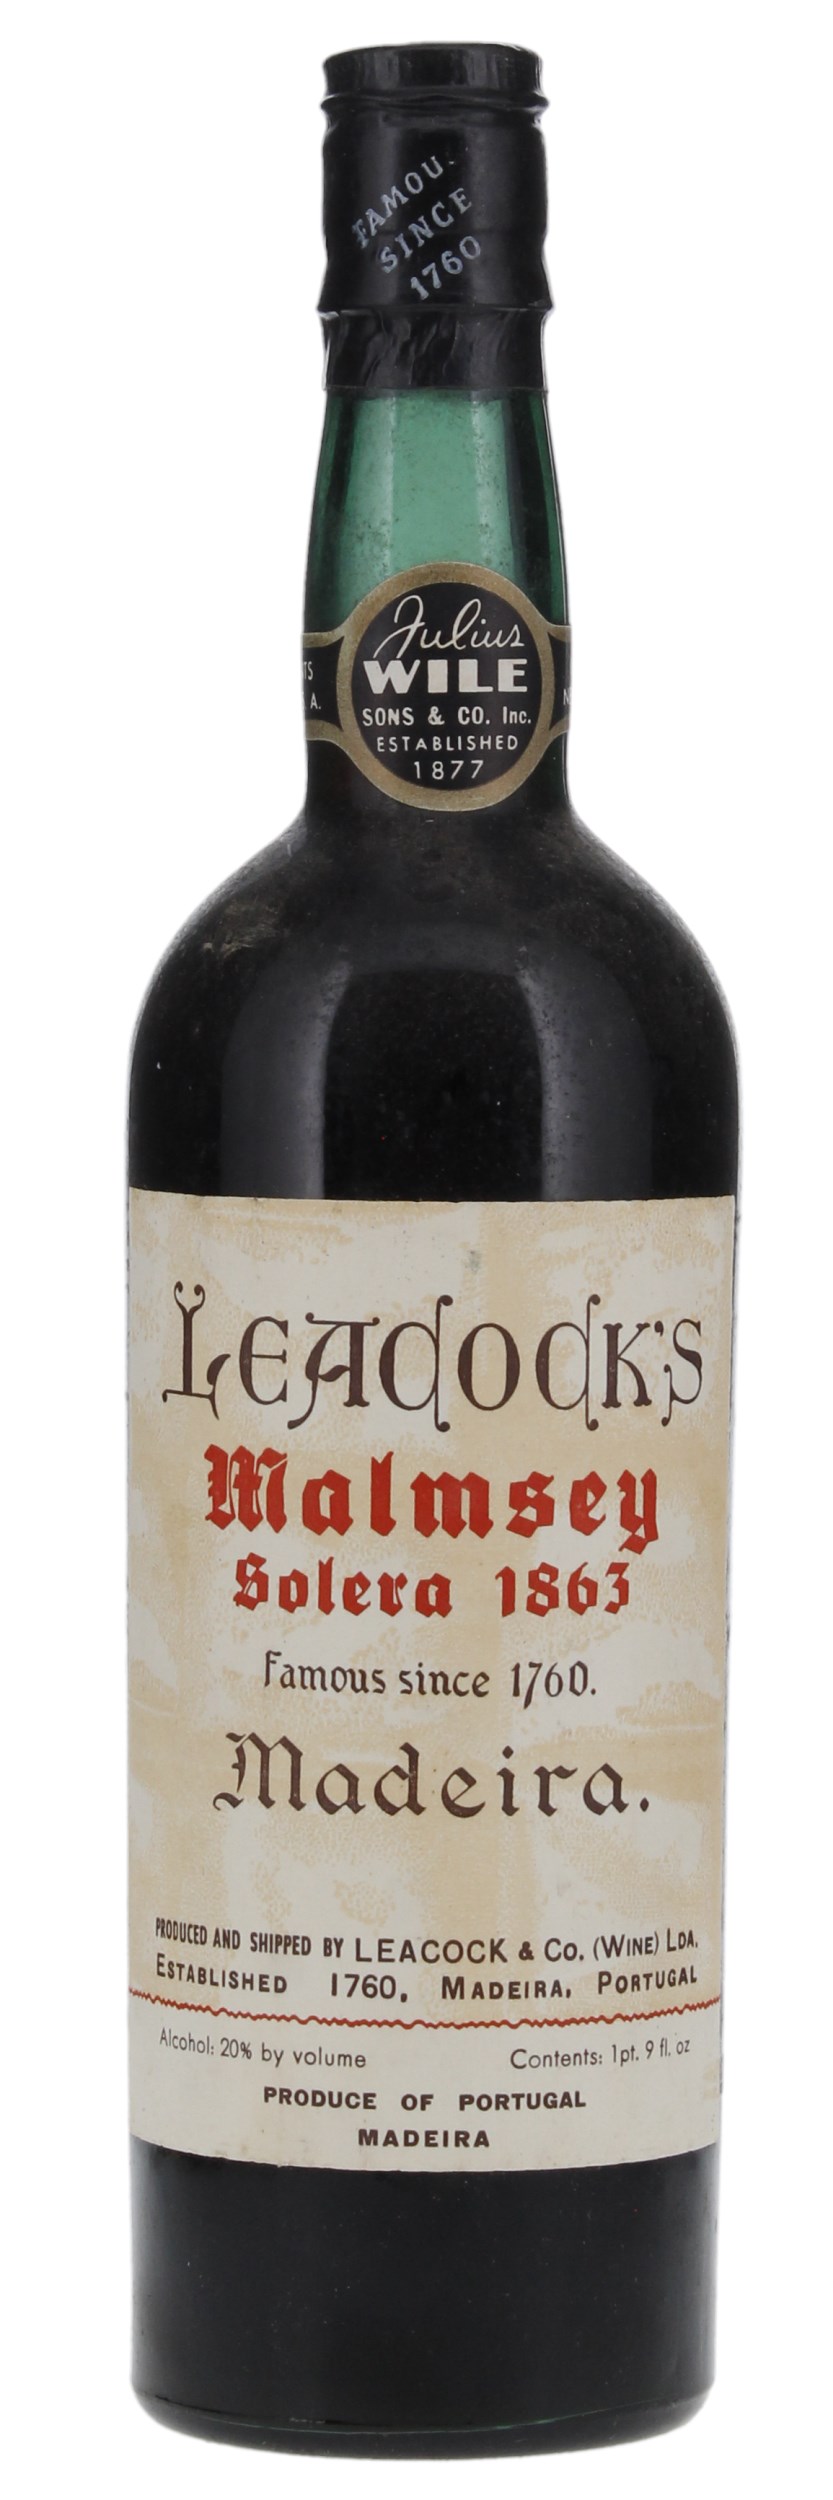 N.V. Leacock Malmsey Solera 1863 Madeira, 750ml